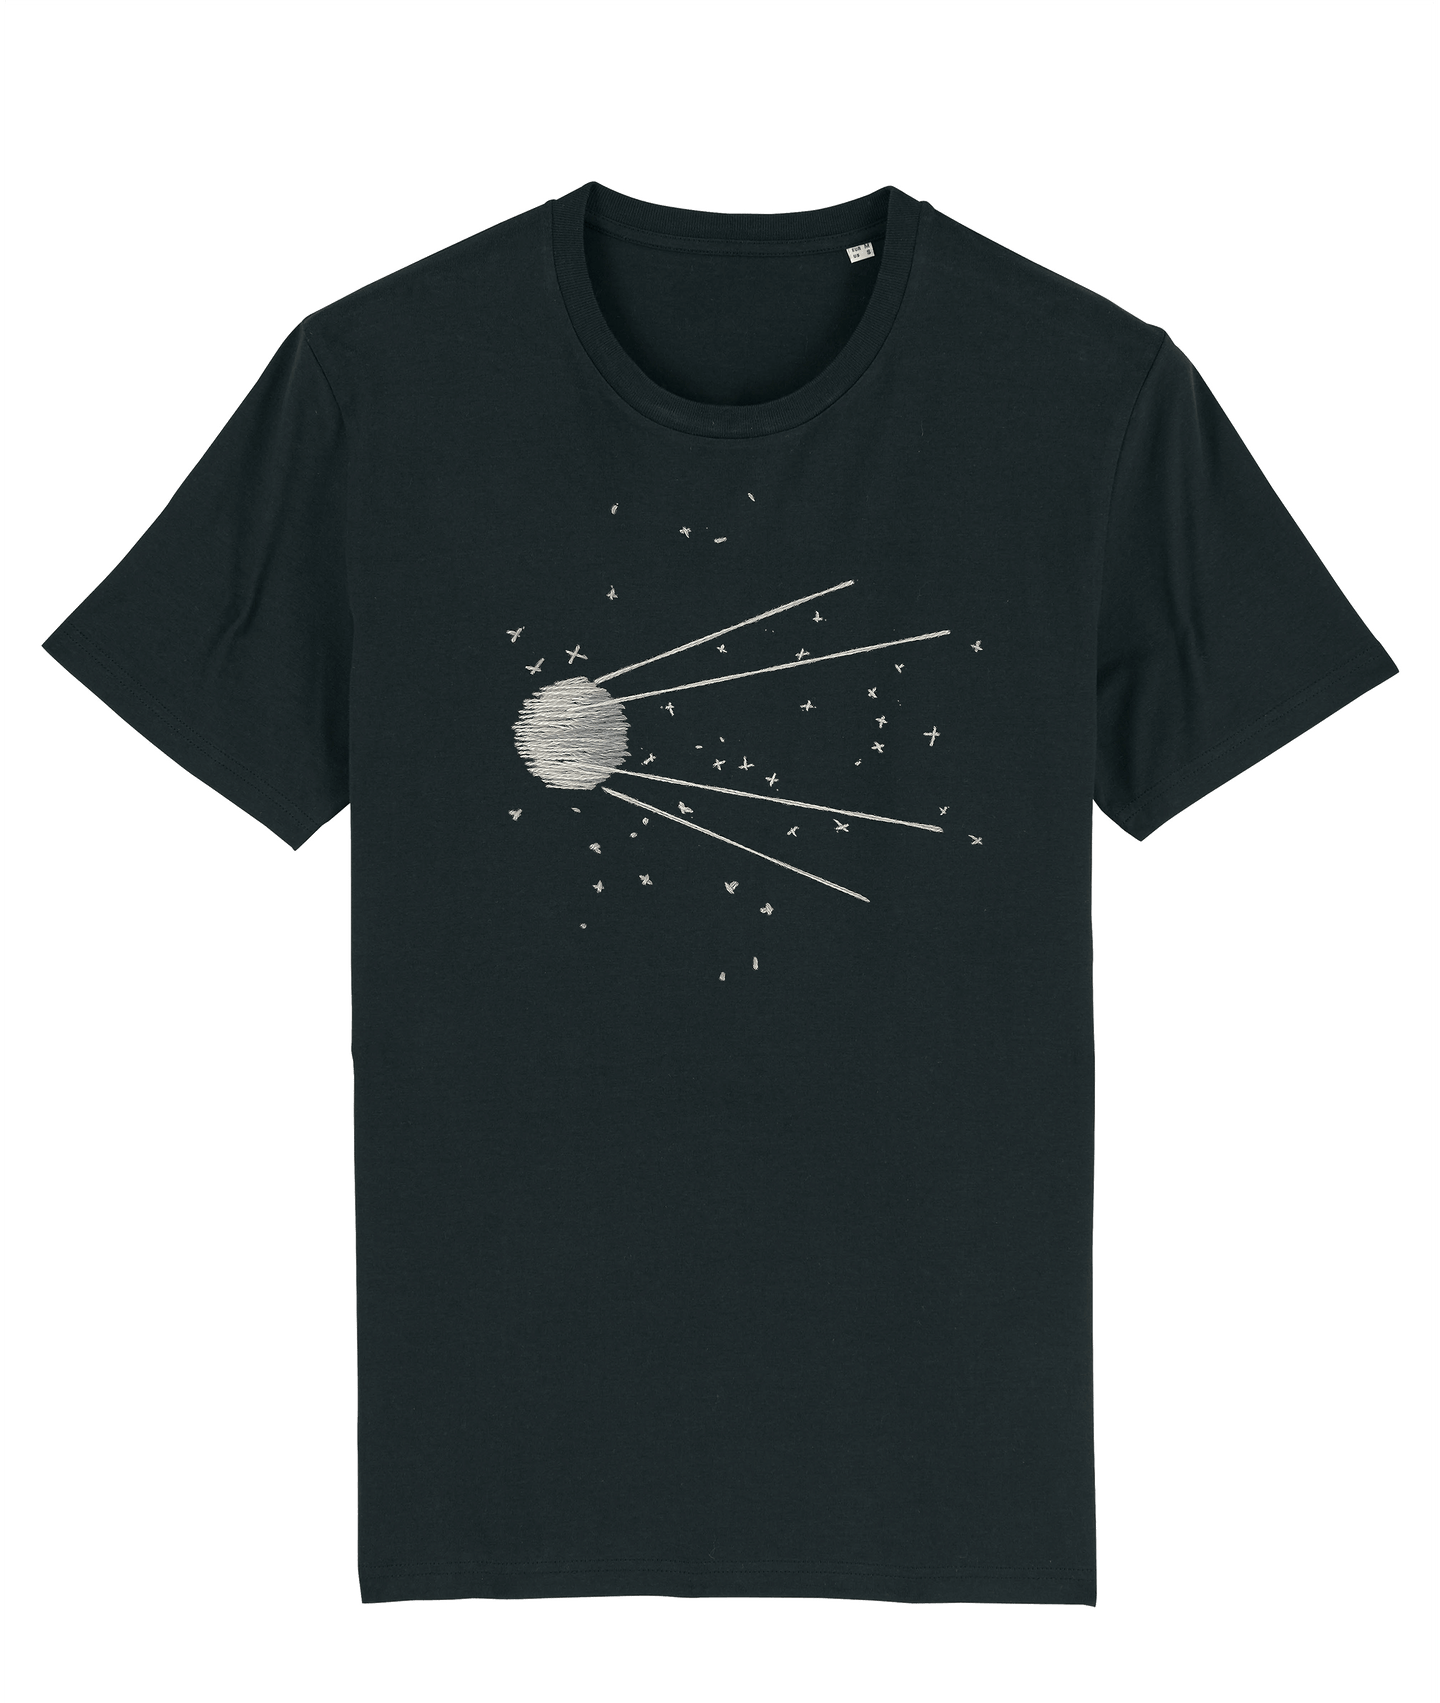 Organic Shirt - The Sputnik Black